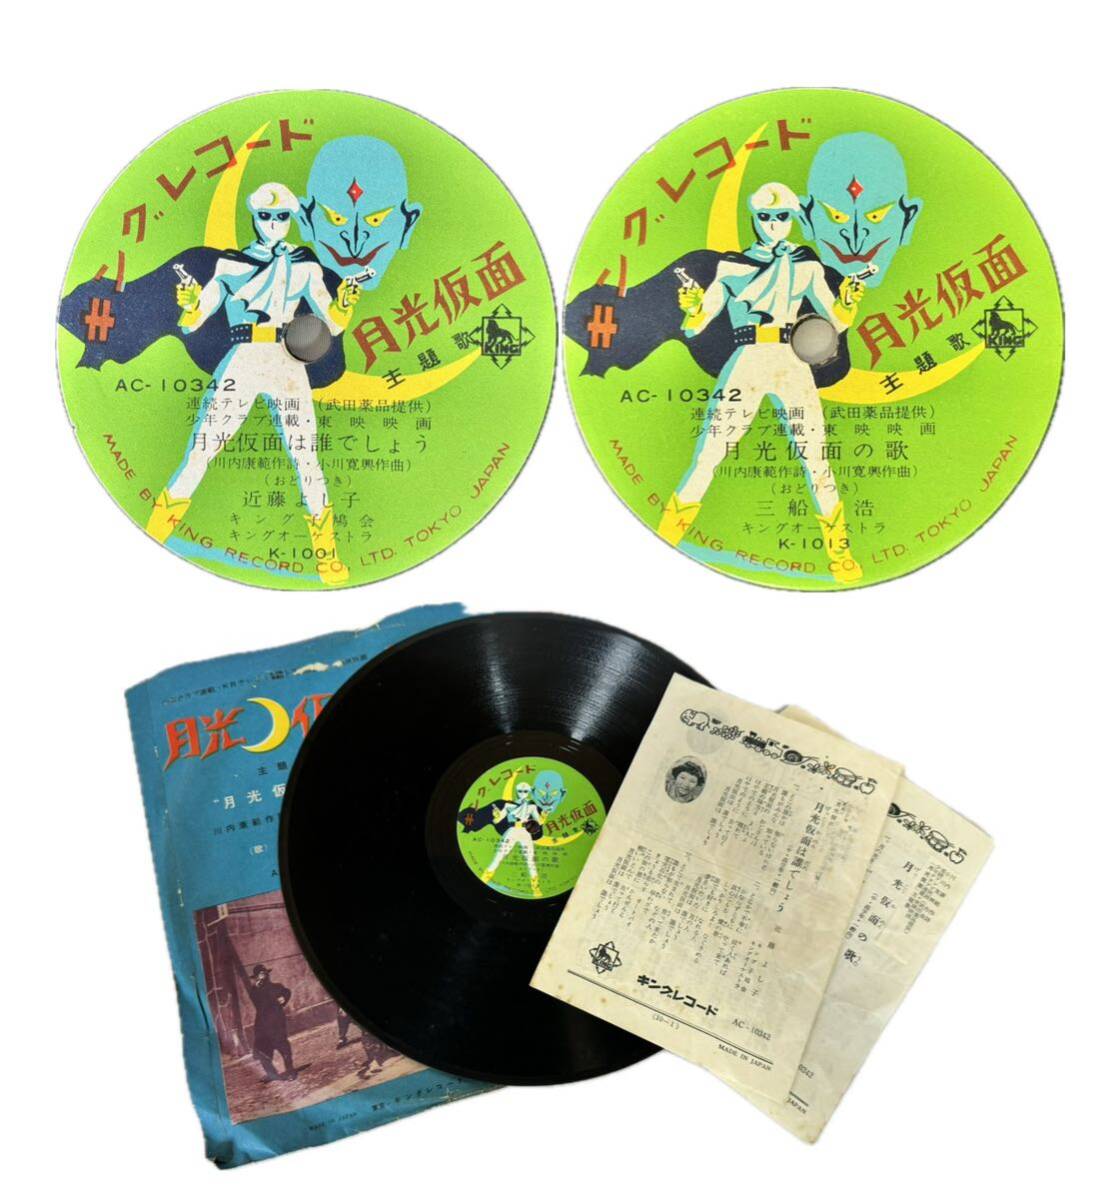 SG-610 SP盤 月光仮面は誰でしょう 近藤よし子 月光仮面の歌 三船浩 キングレコード AC-10342 歌詞カード オリジナルスリーブ 東映の画像1